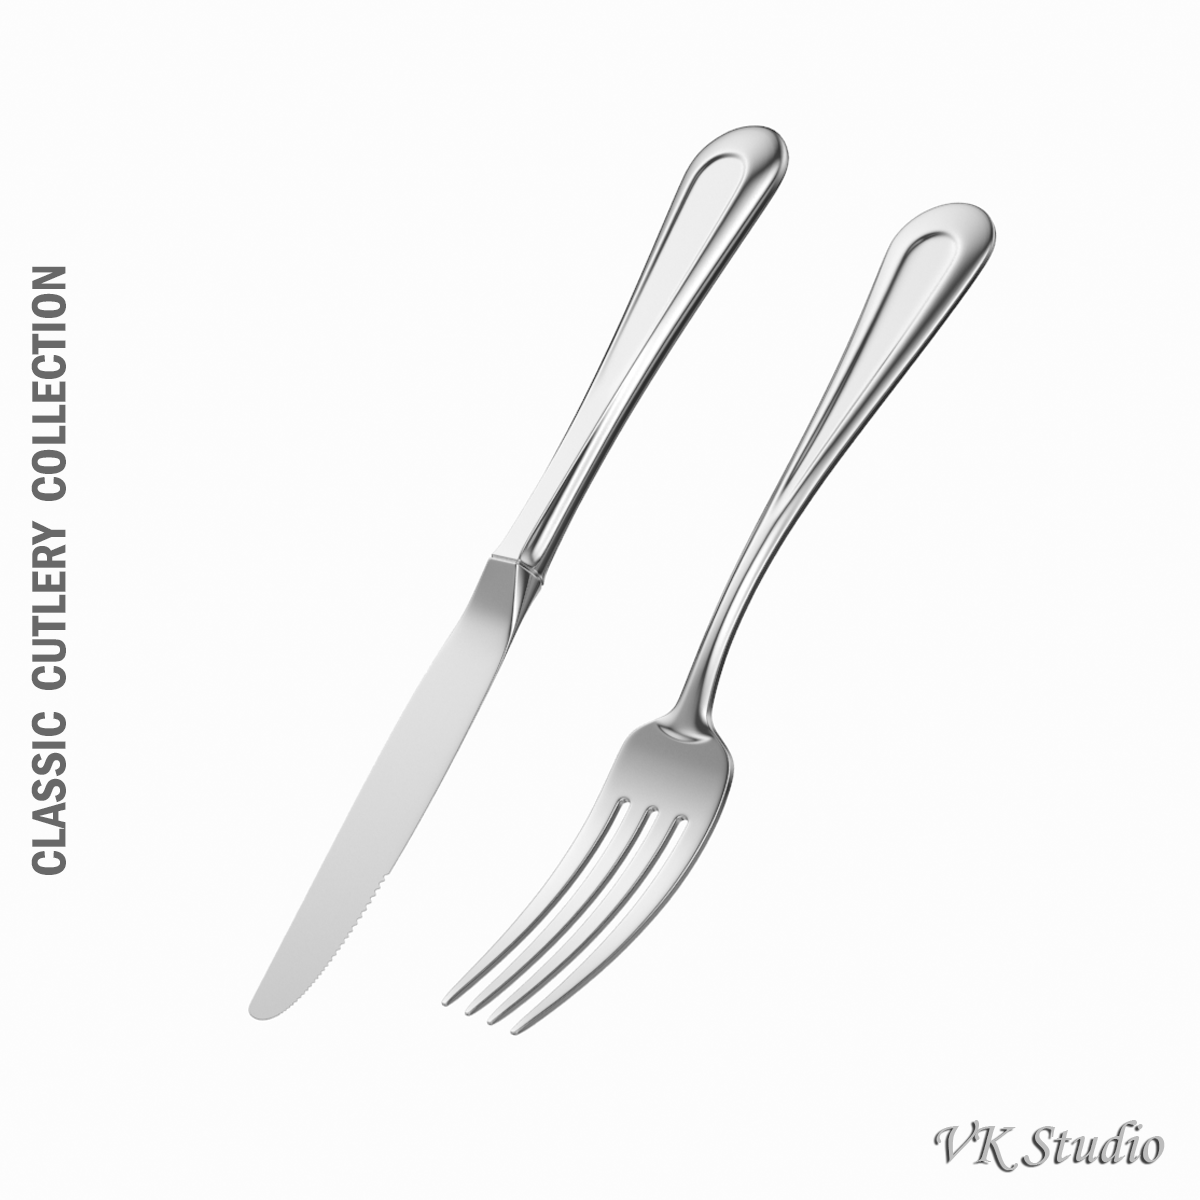 dessert knife and fork classic cutlery 3d model 3ds c4d fbx max max ma mb obj txt png stl 285929